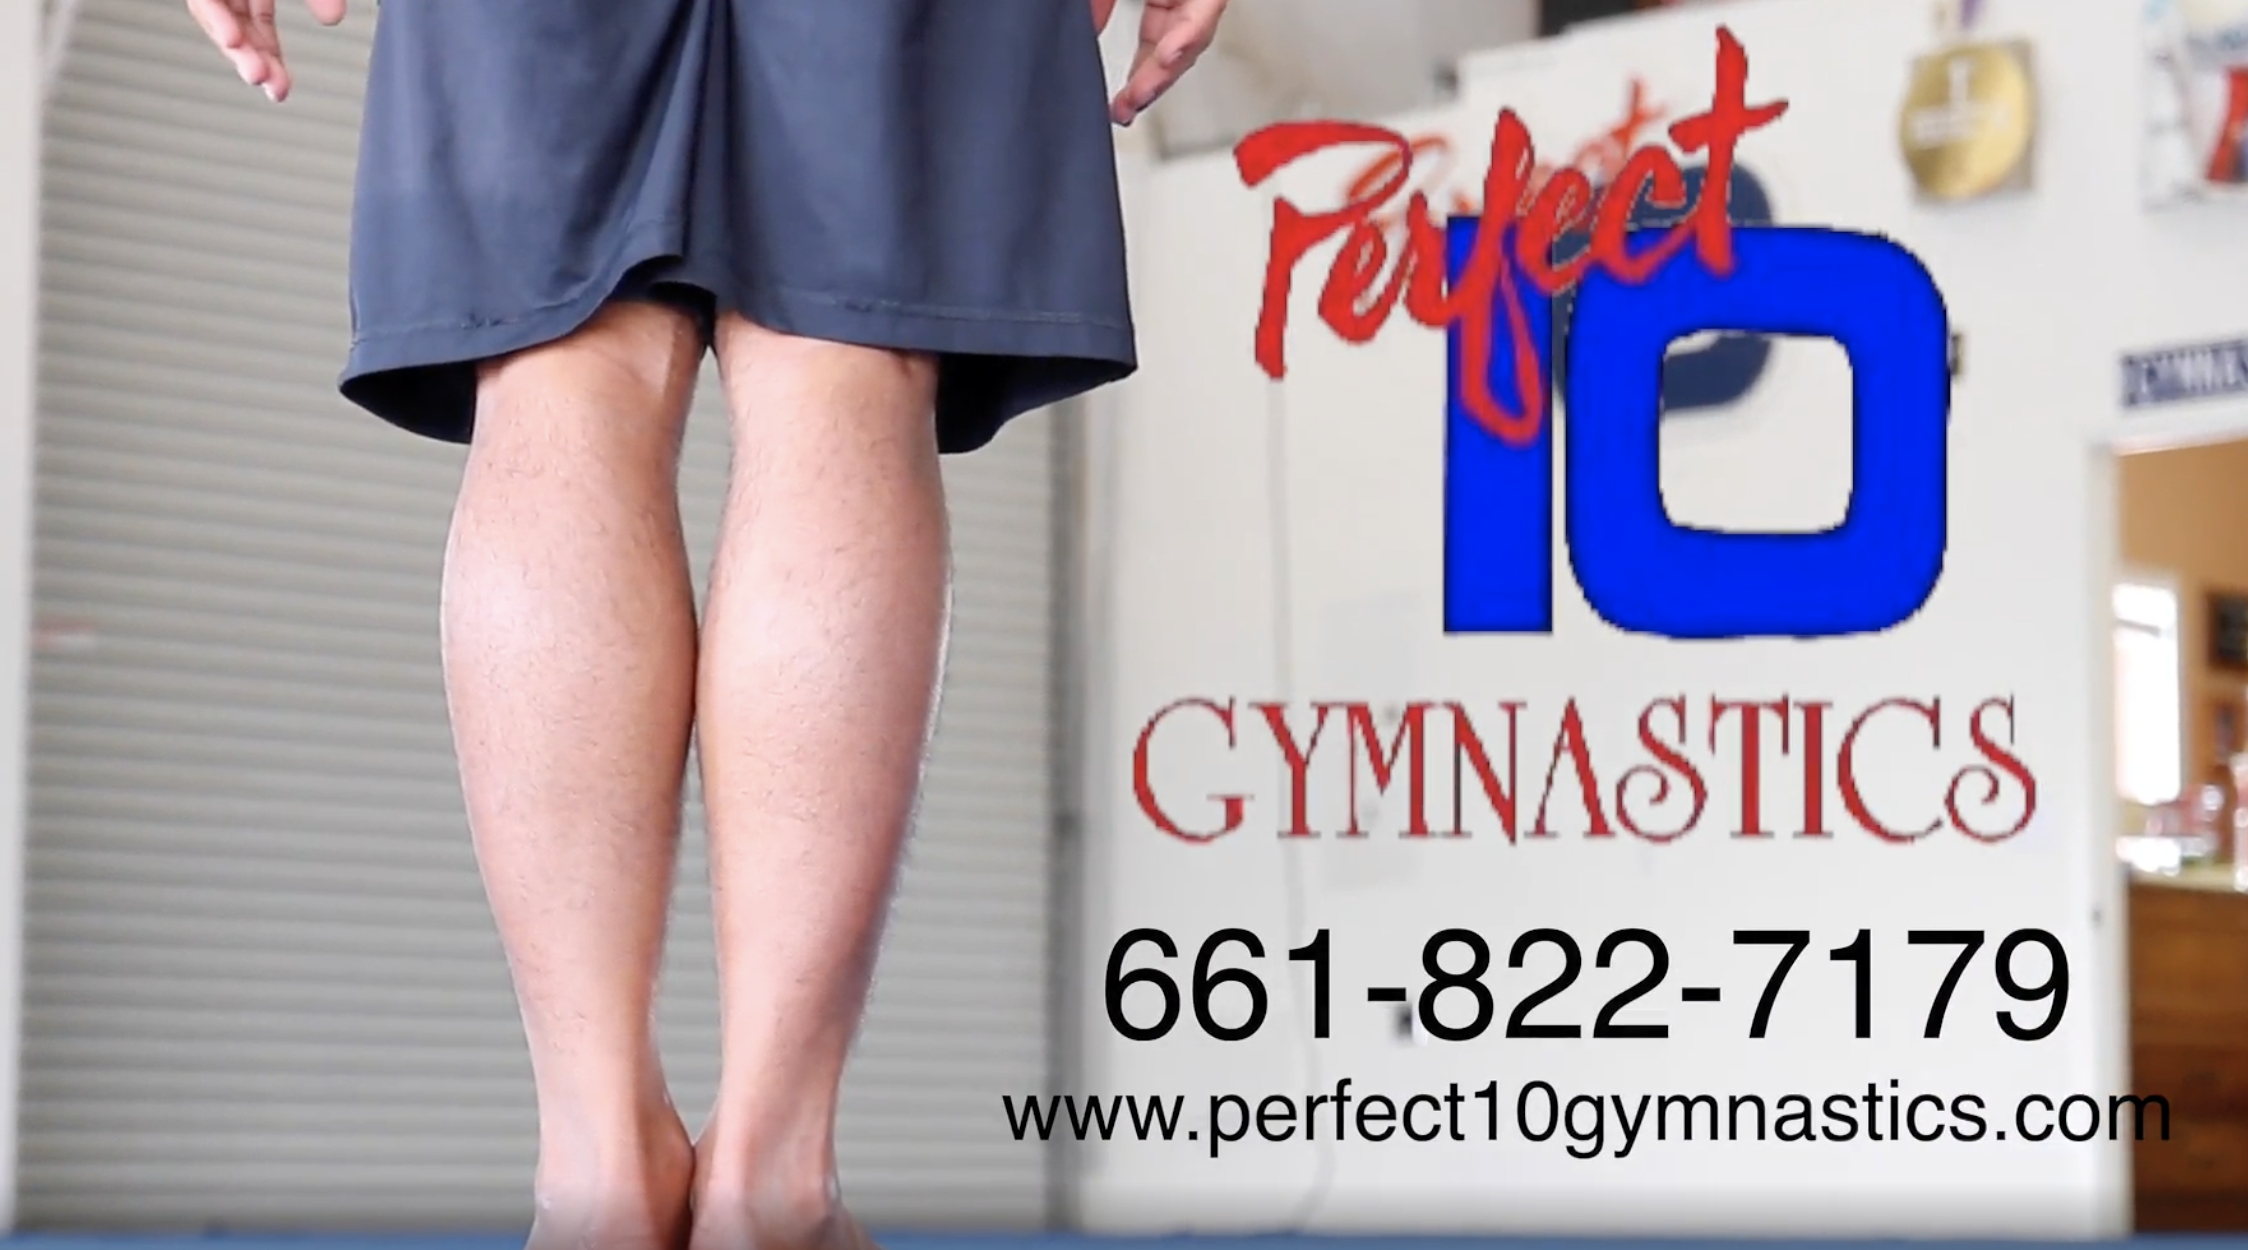 Perfect 10 Gymnastics